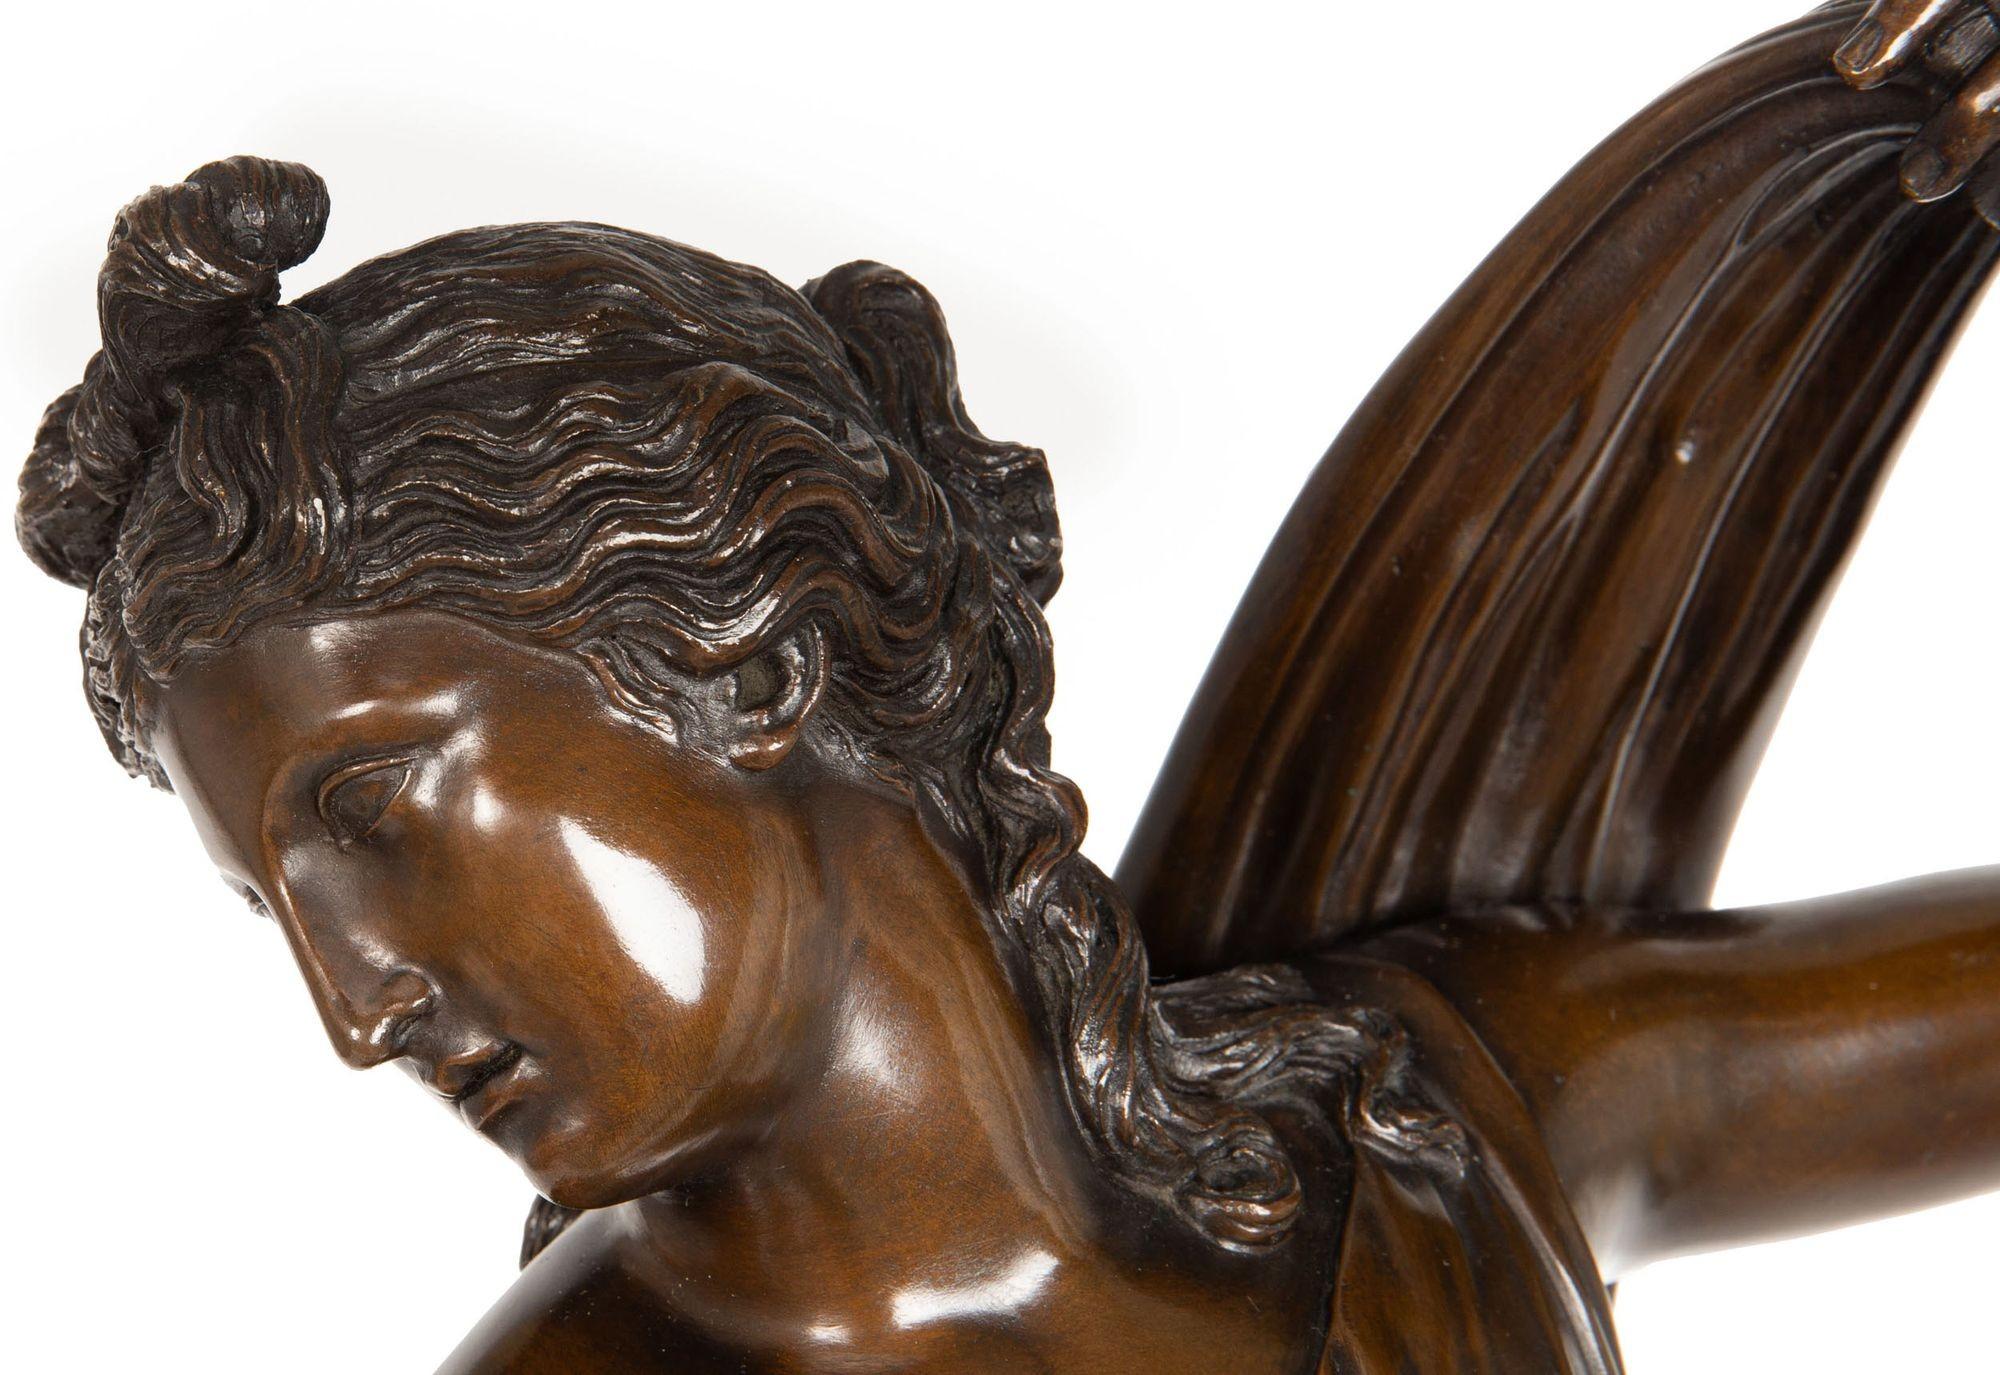 19th Century Grand Tour Bronze Sculpture “Callipygian Venus” of Antiquity For Sale 2